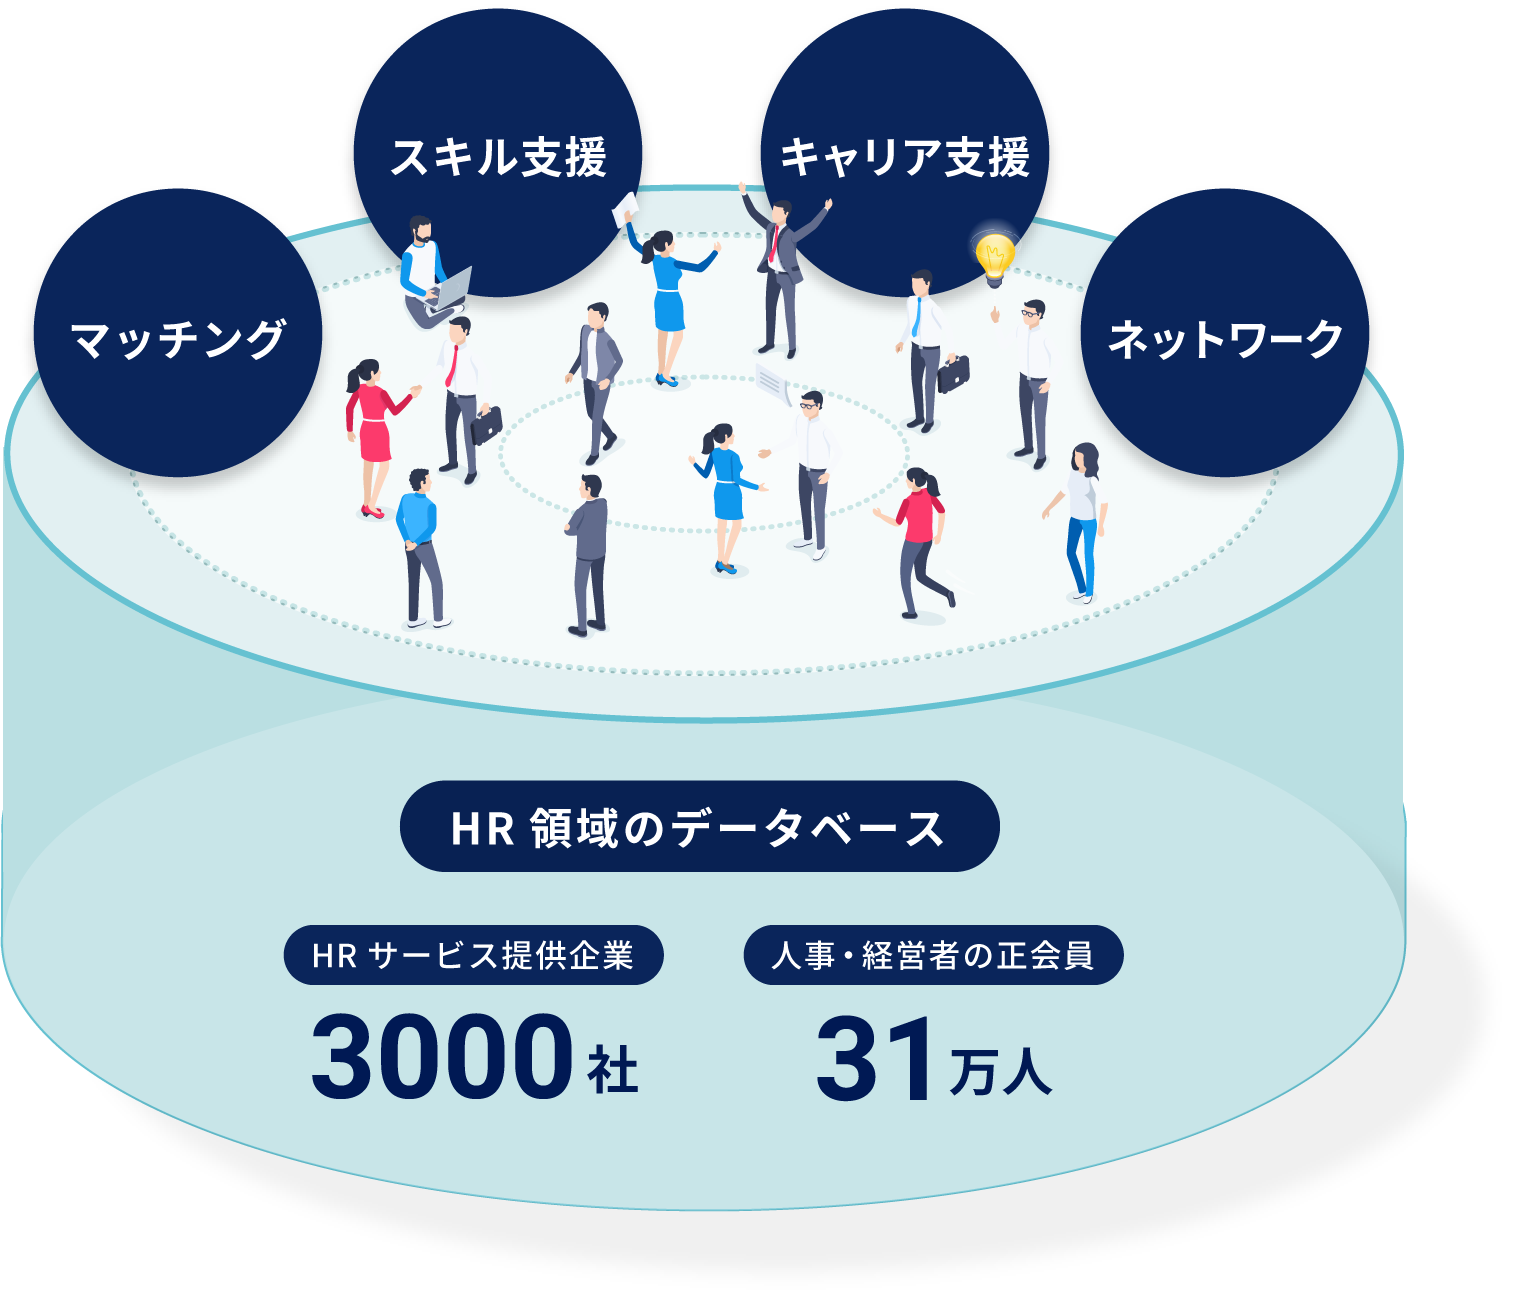 HRプラットフォーム事業『日本の人事部』はＨＲ領域の情報プラットフォーム。